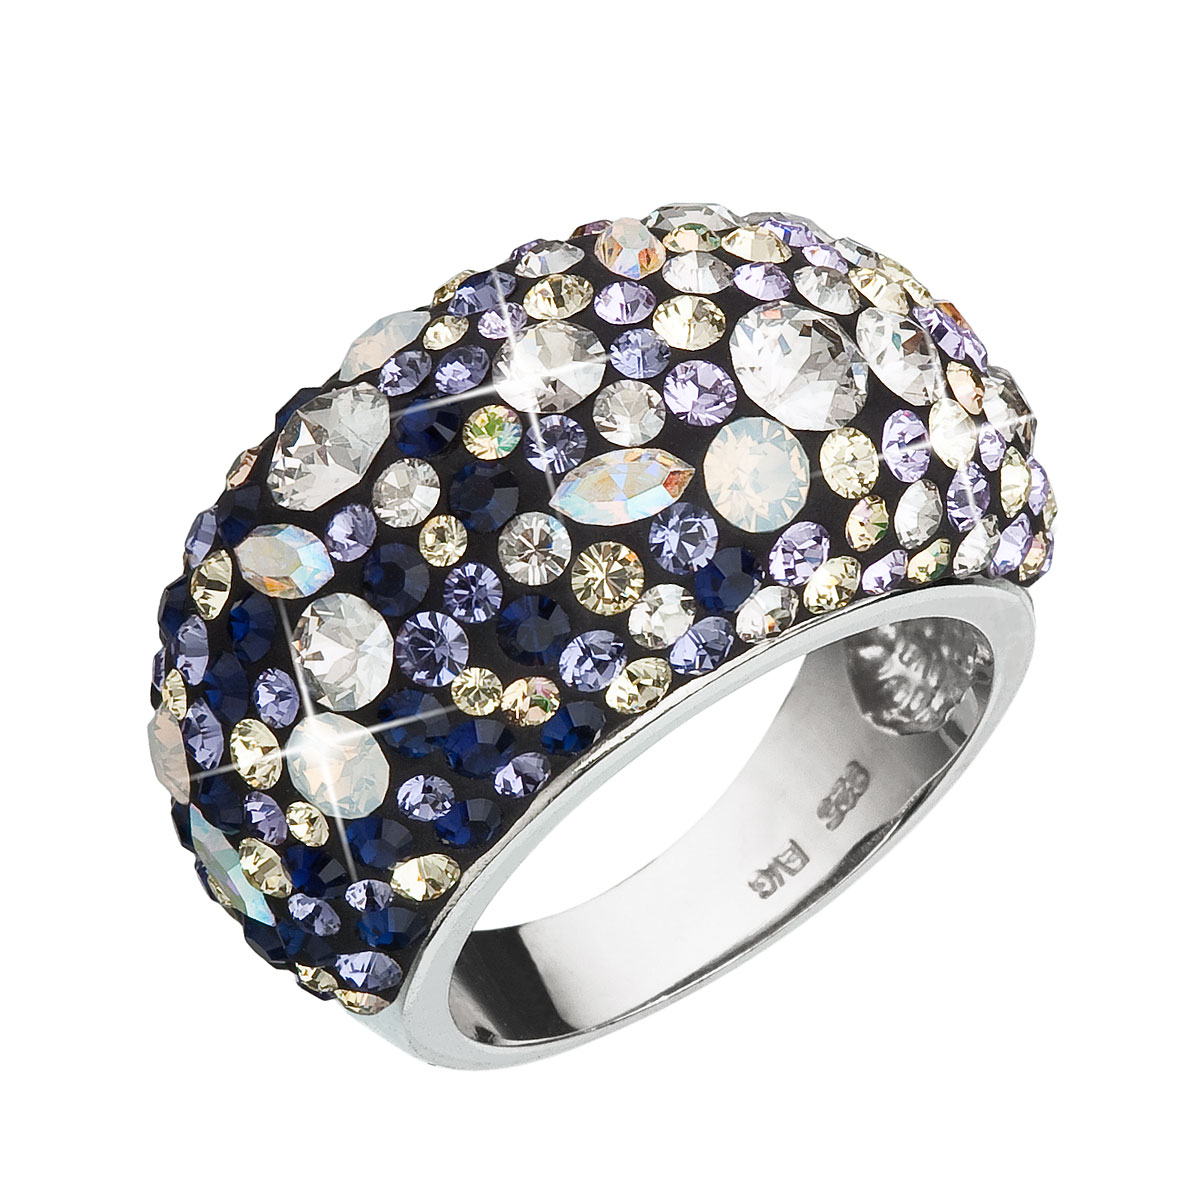 Evolution Group Stříbrný prsten s krystaly Swarovski mix barev fialová 35028.3 indigo